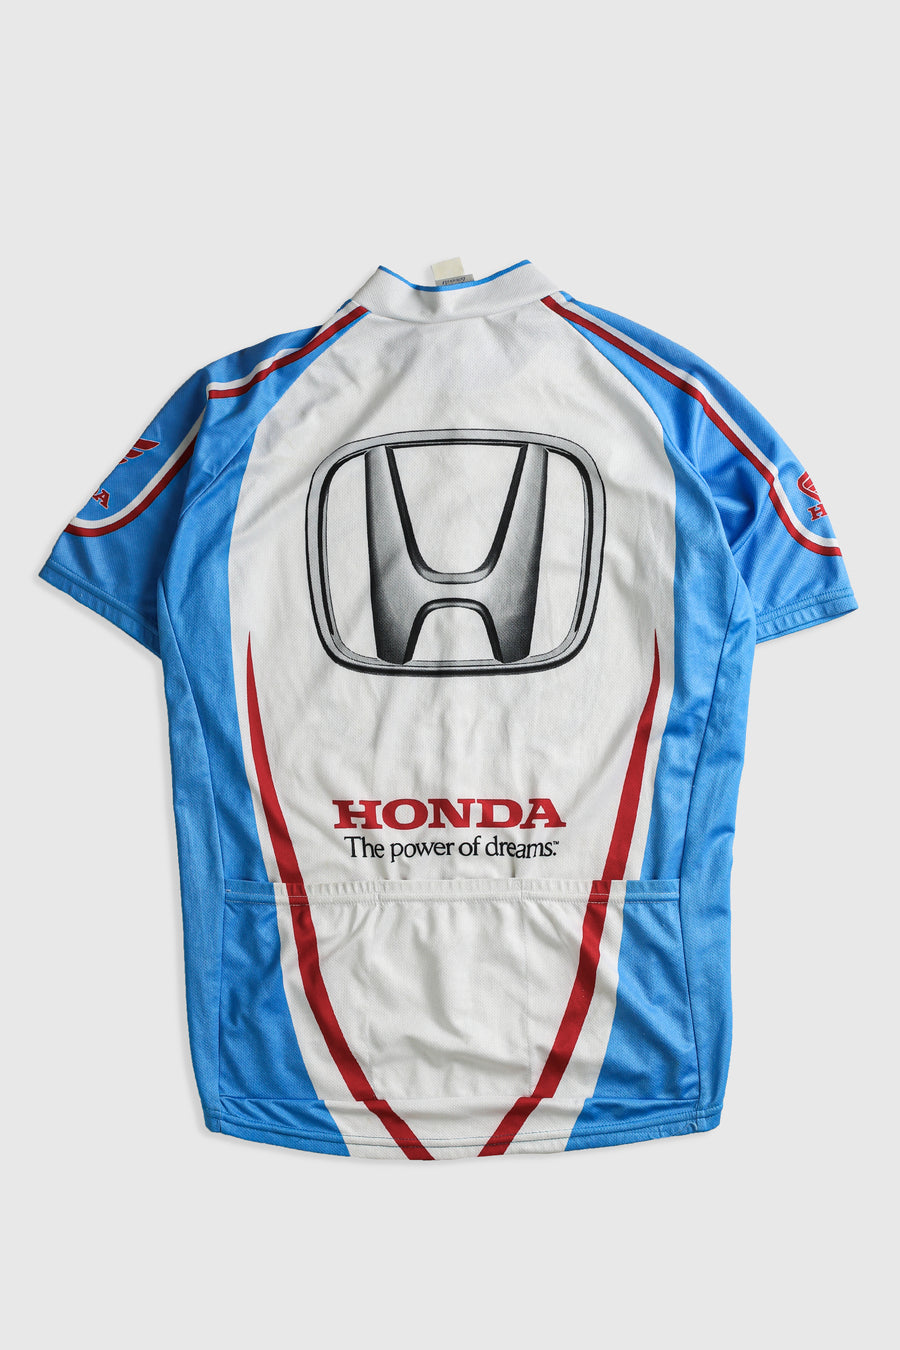 Honda Cycling Jersey